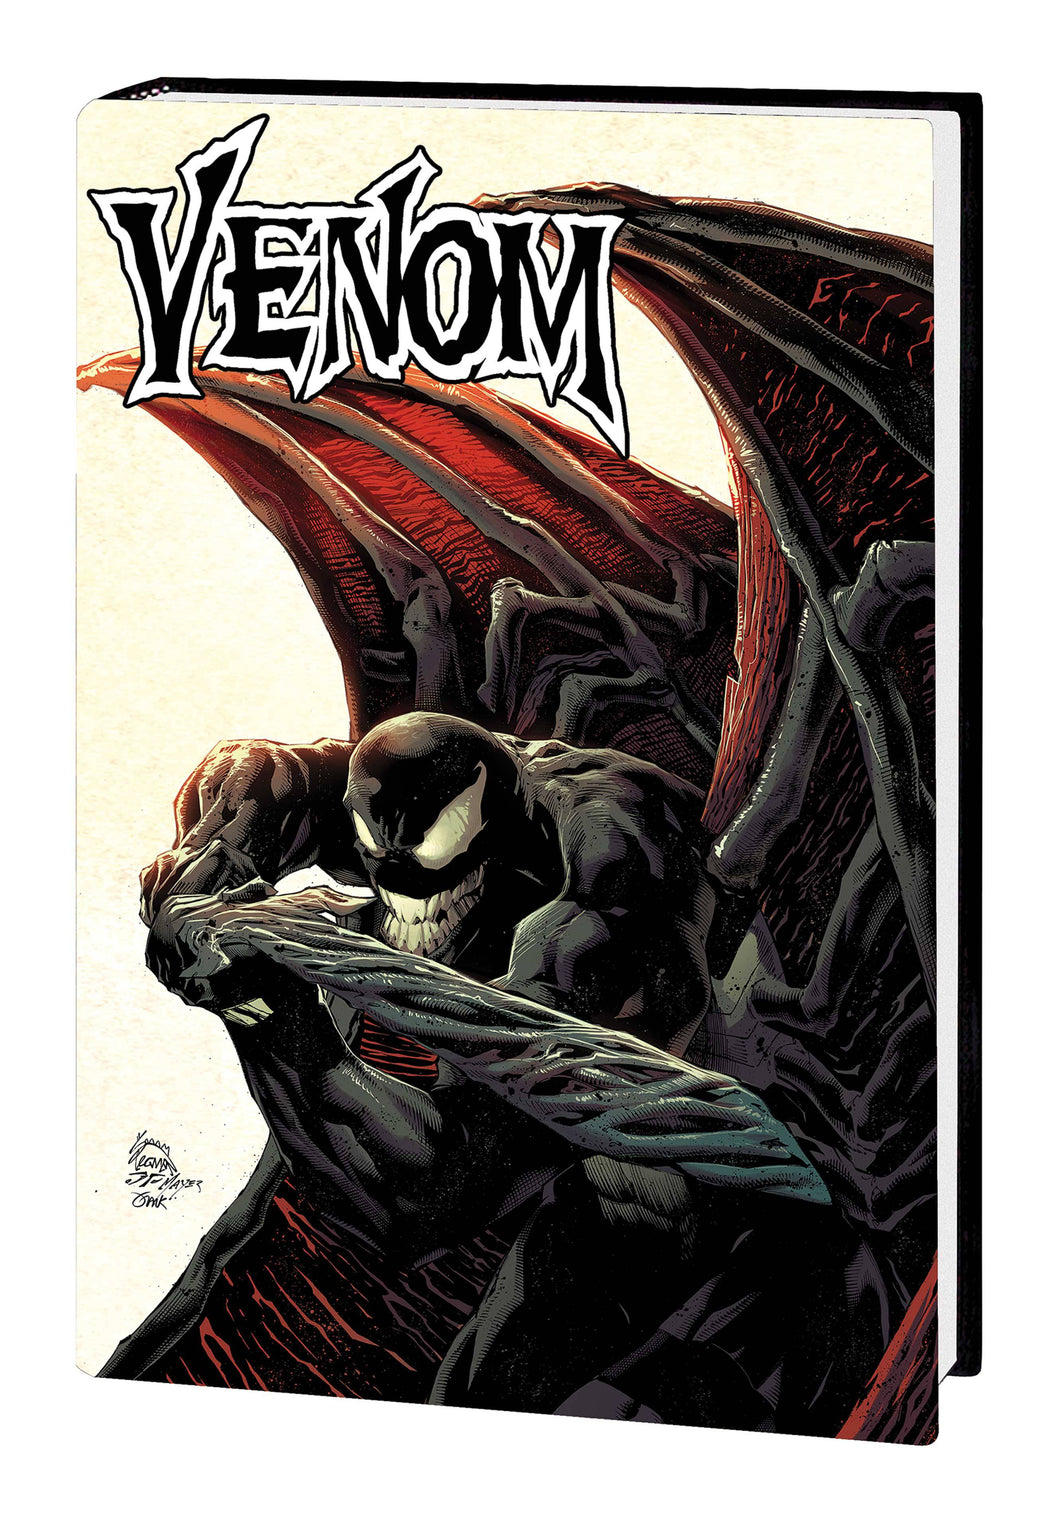 Venom By Donny Cates HC Vol 02 - Books